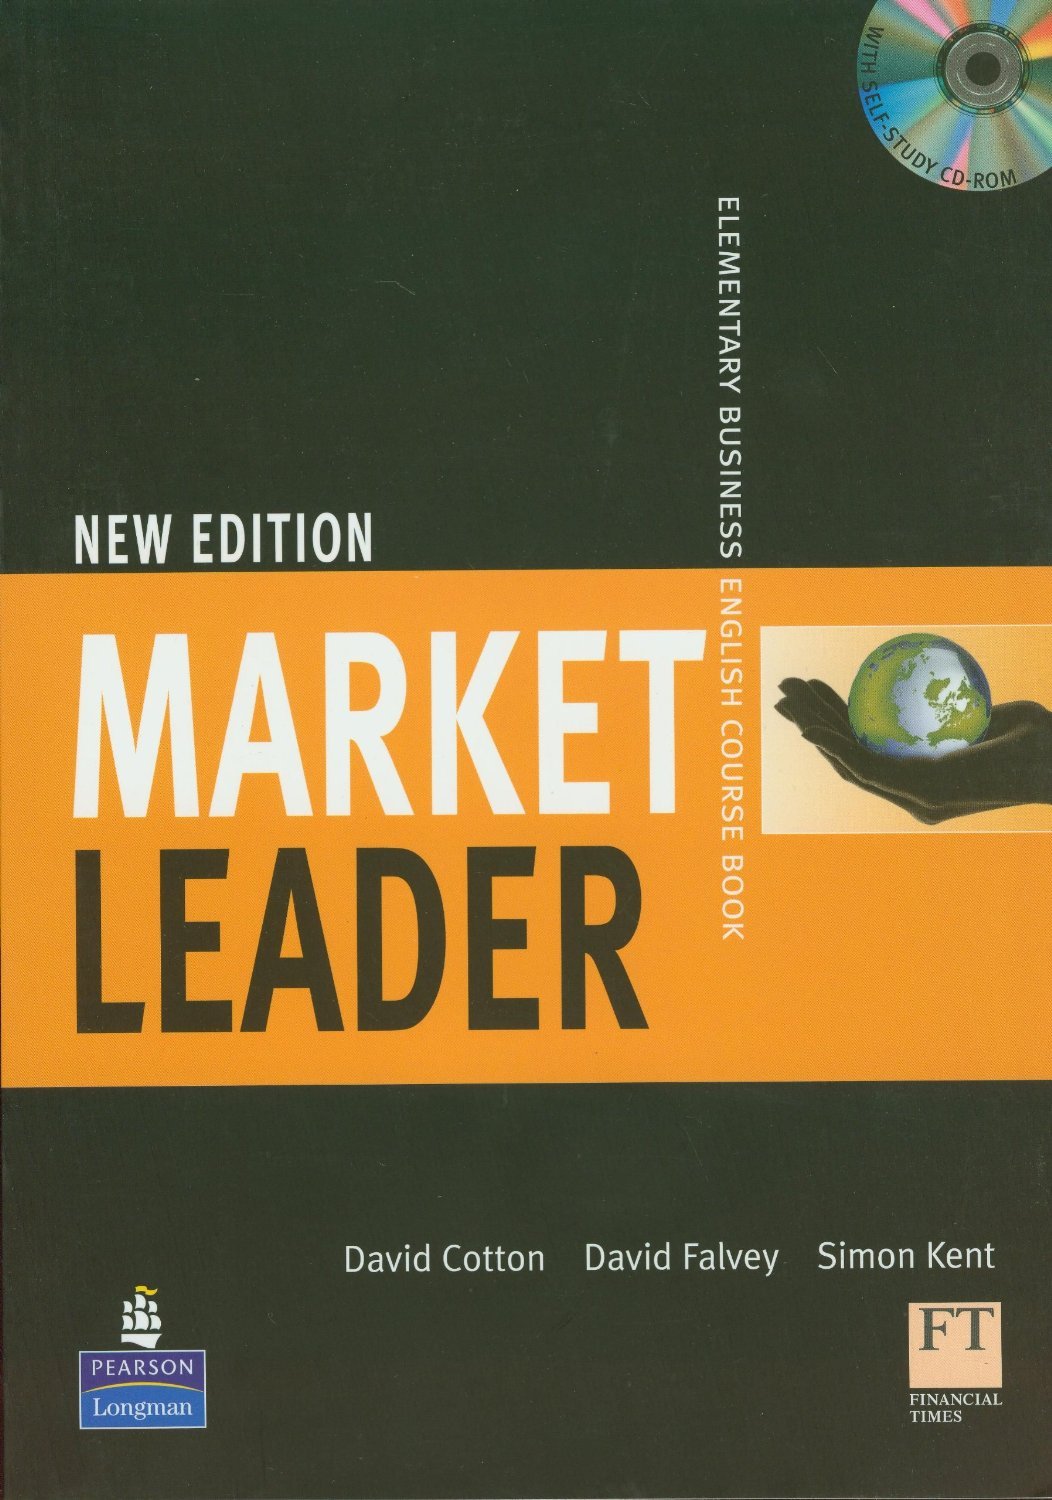 Market Leader Elementary